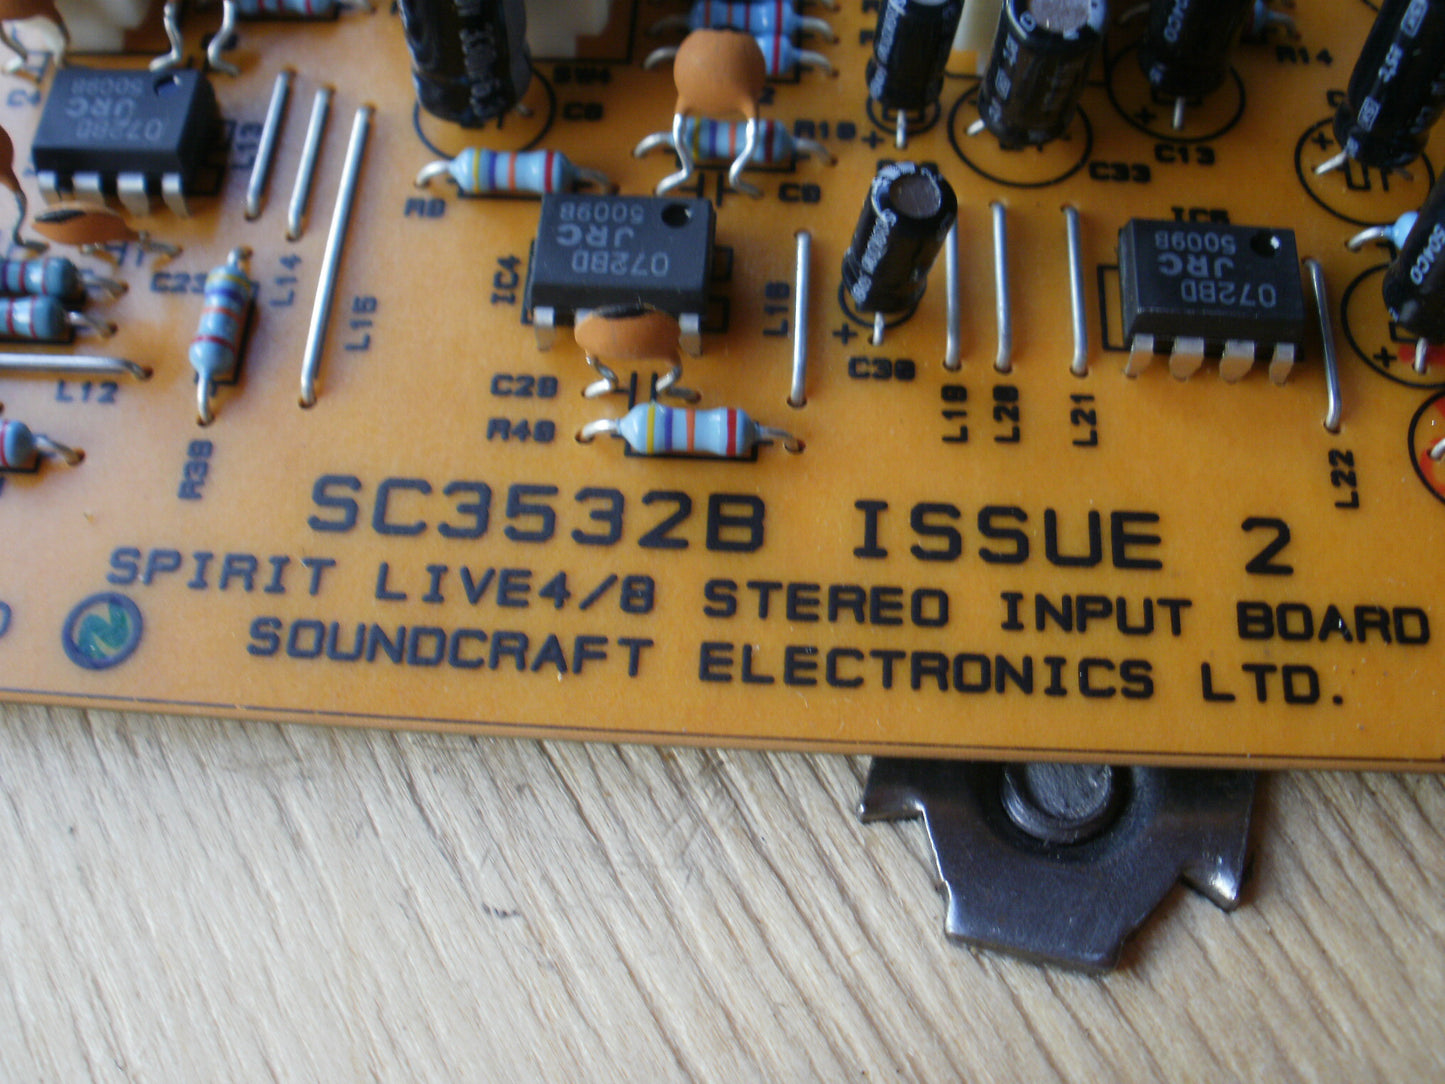 Soundcraft Spirit Live 4-8 Stereo Input Board SC3532B various